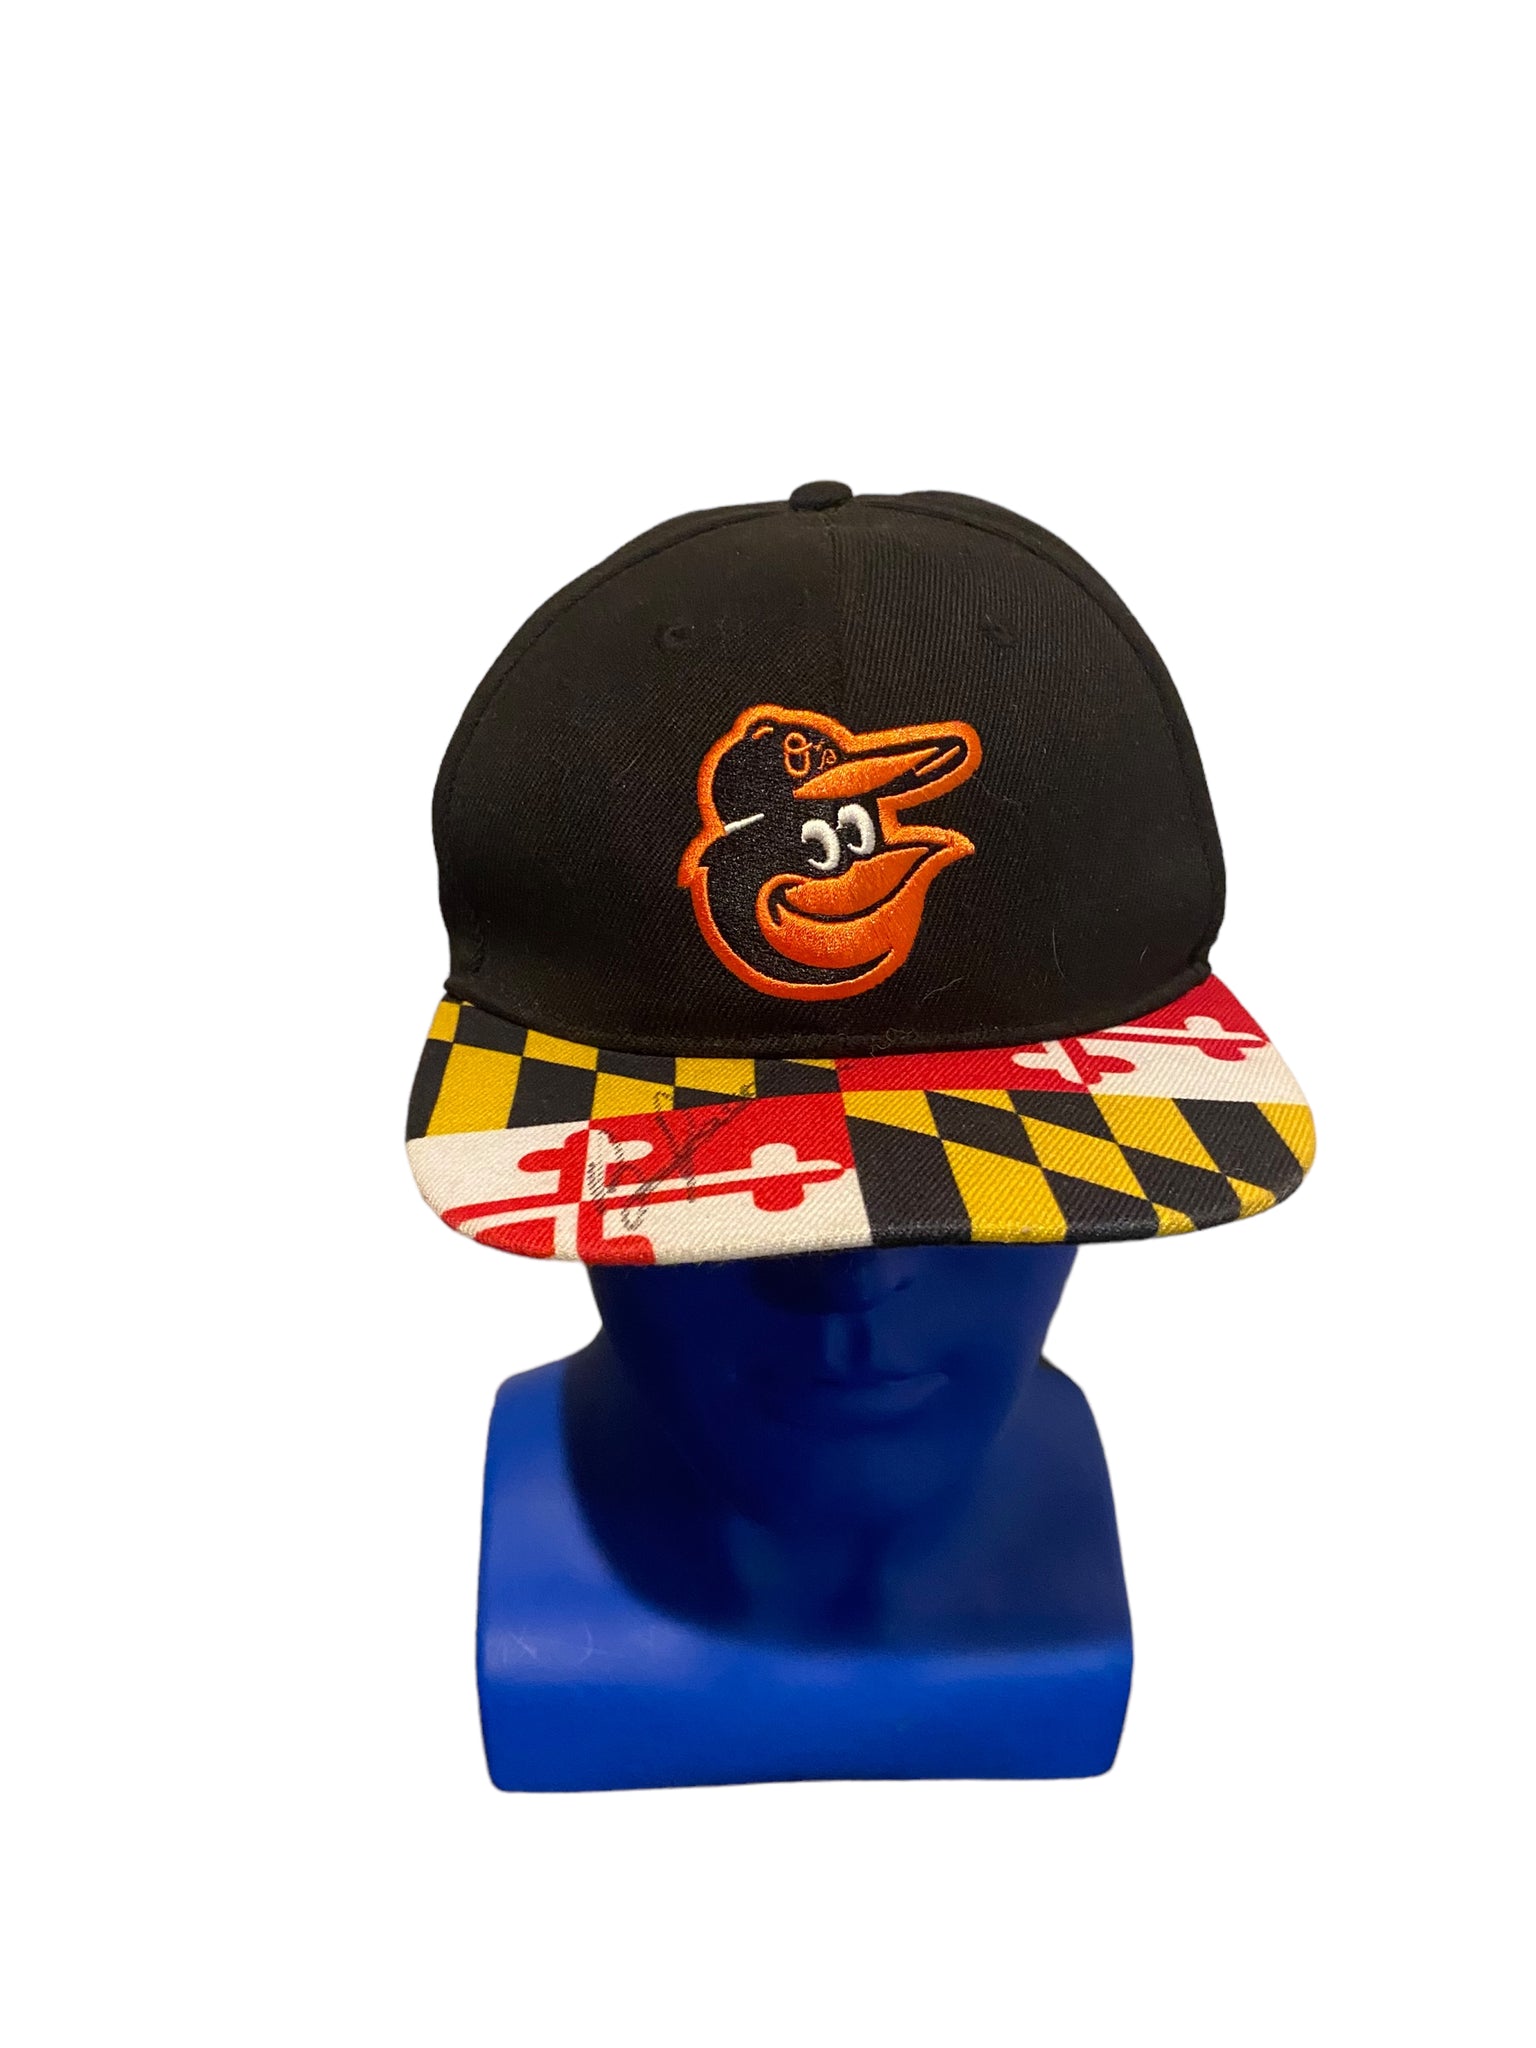 Baltimore Orioles Baseball Hat Cap Adjustable Maryland Flag Logo (read)